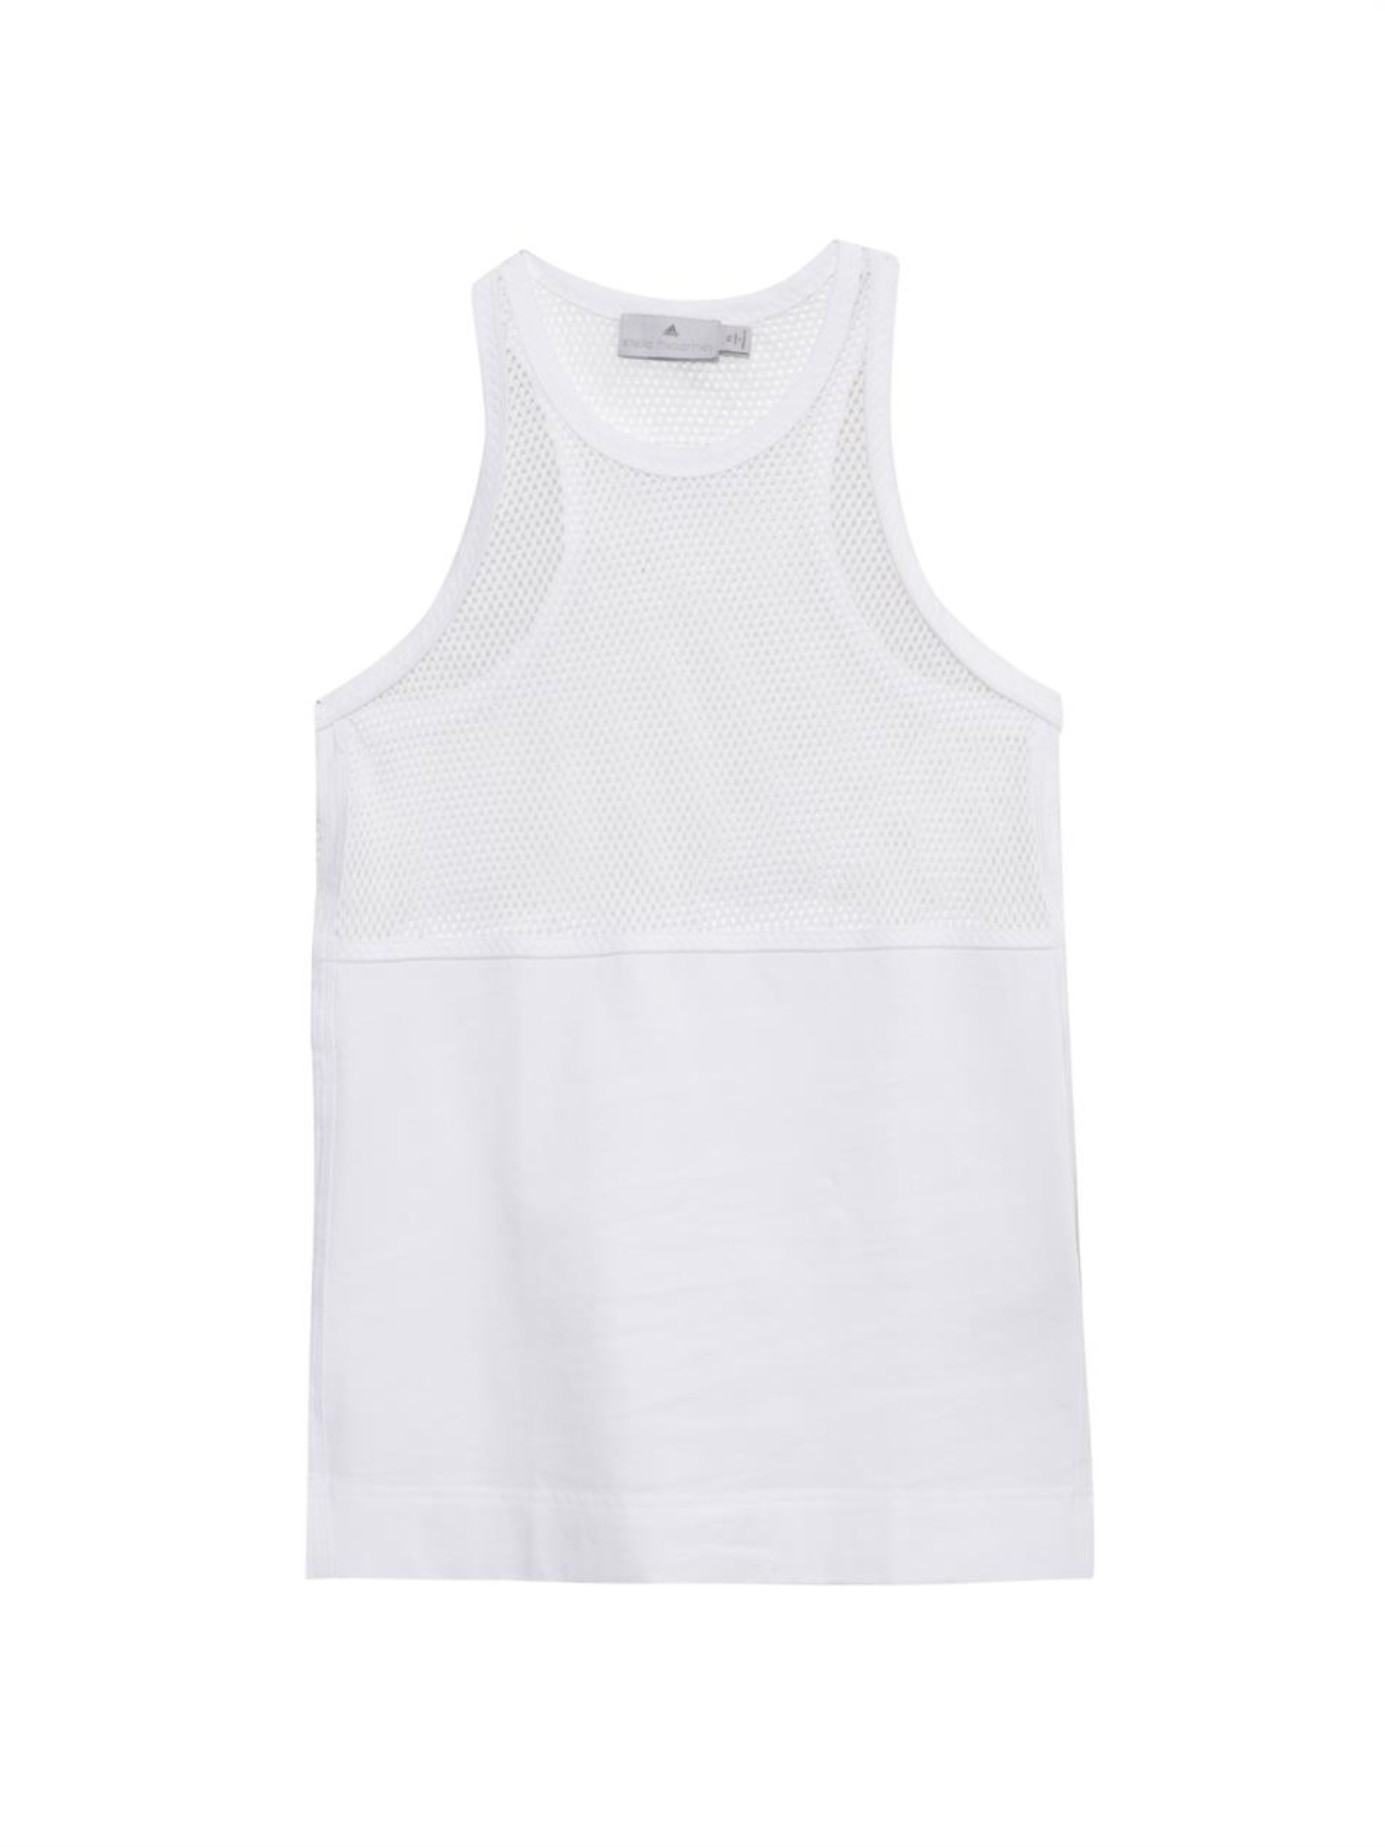 adidas By Stella McCartney Mesh-Panel Jersey Tank Top in White | Lyst